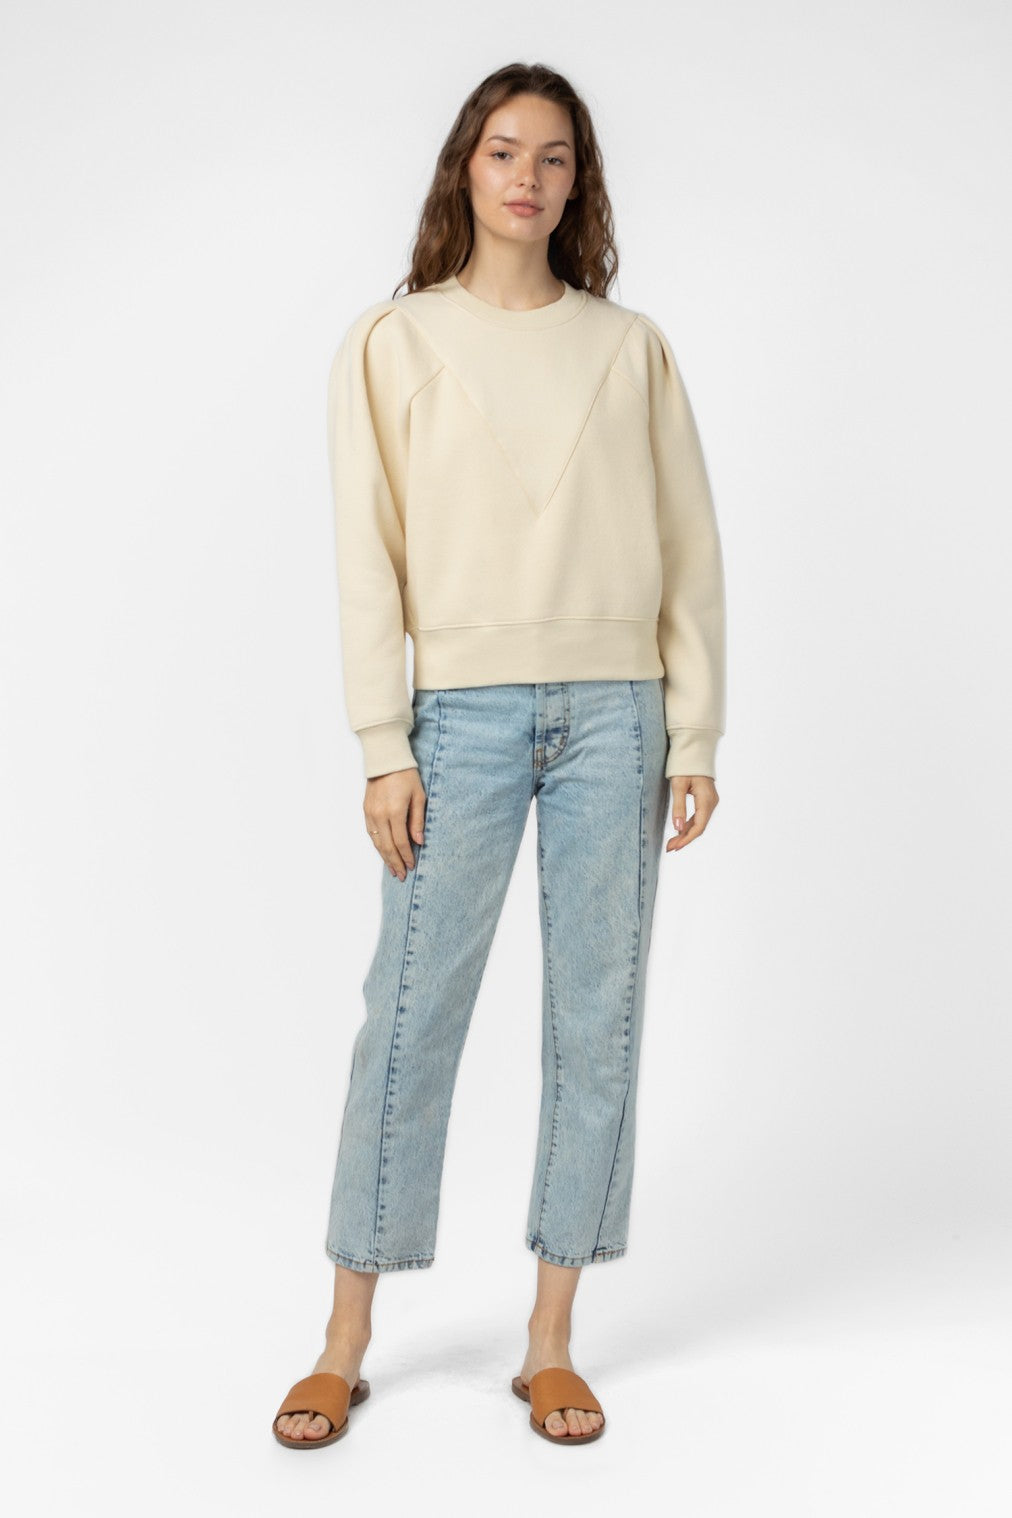 Simone Sweatshirt - Premium  Denim from Mod Ref - Just $47.60! Shop now at shopthedenimbar